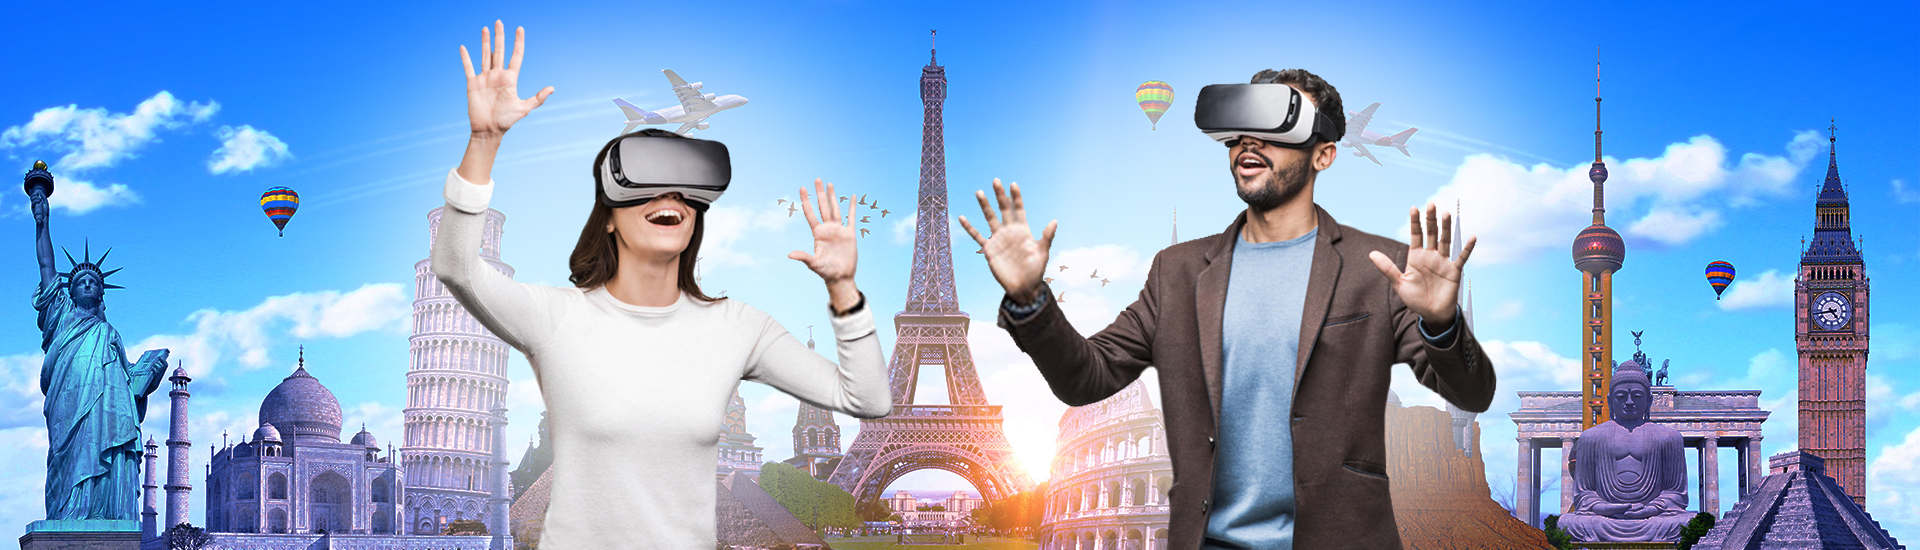 virtual reality tourism apps